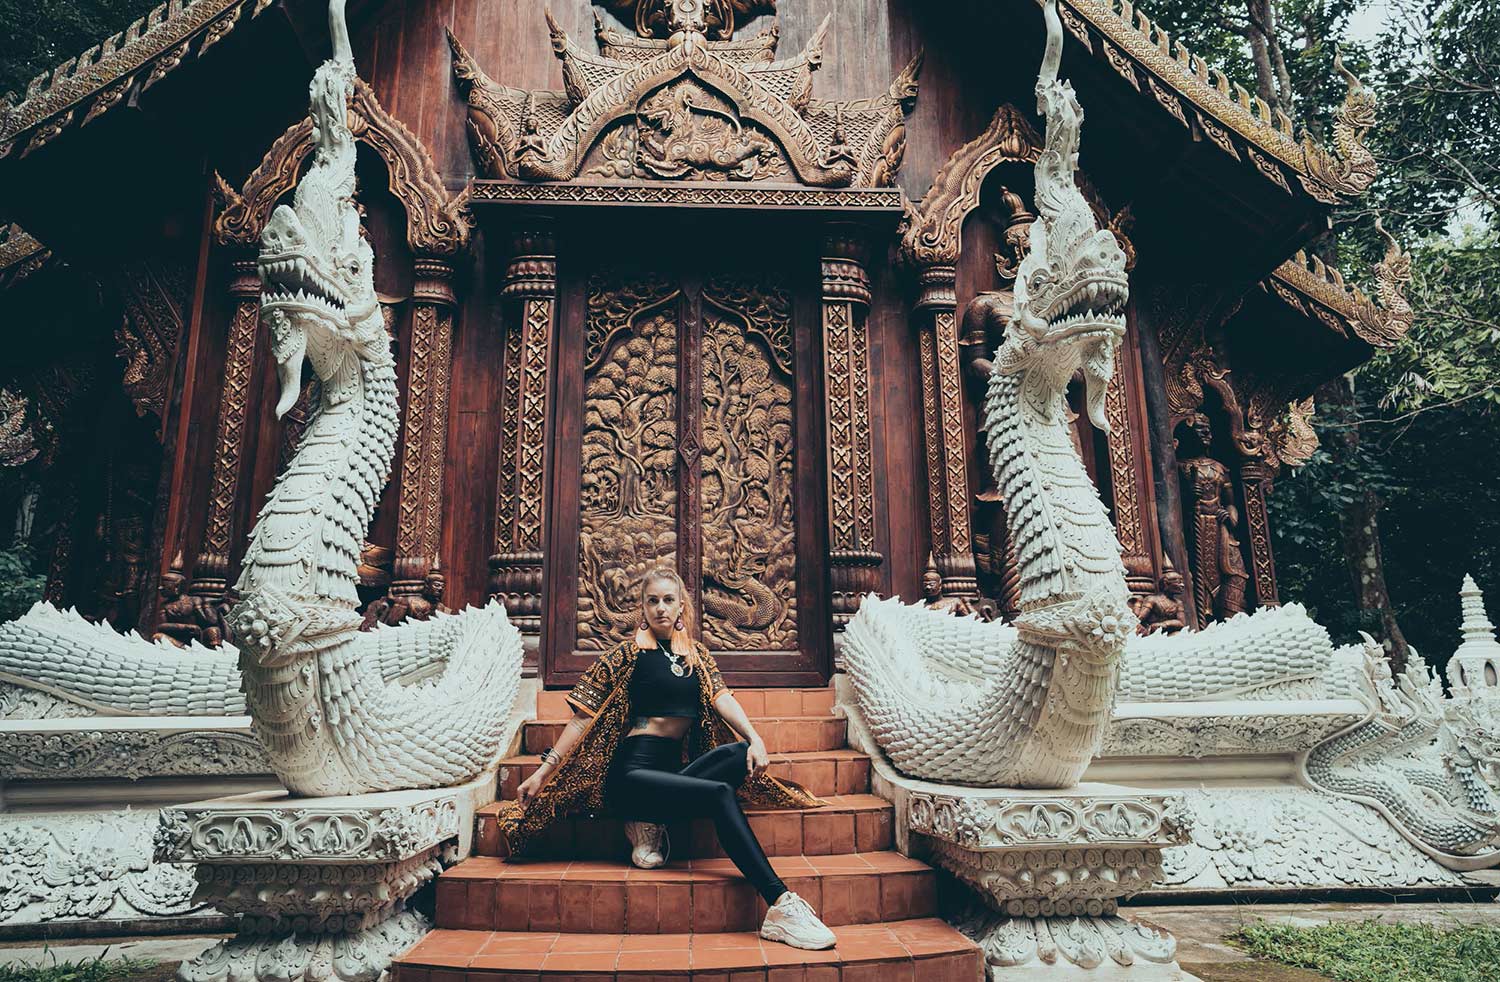 Into The Wild - Full dfay Chiang Mai photo tour